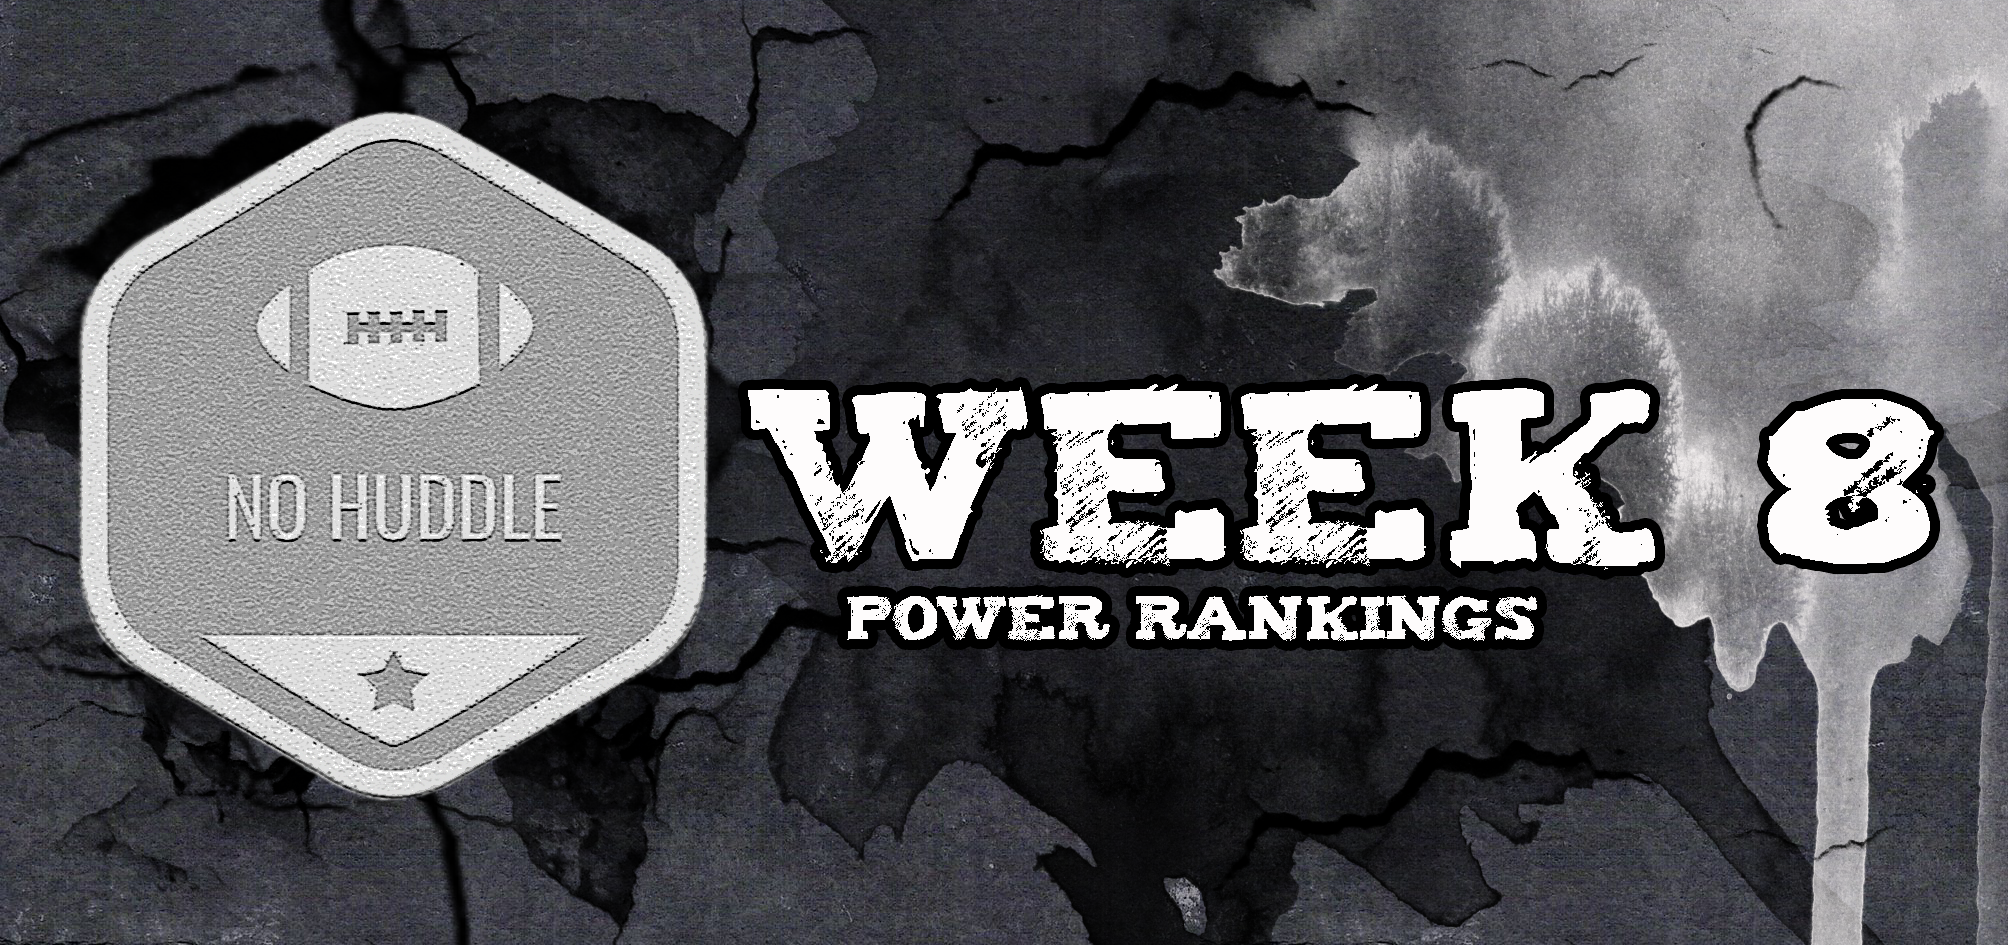 Power Rankings: Semana 8